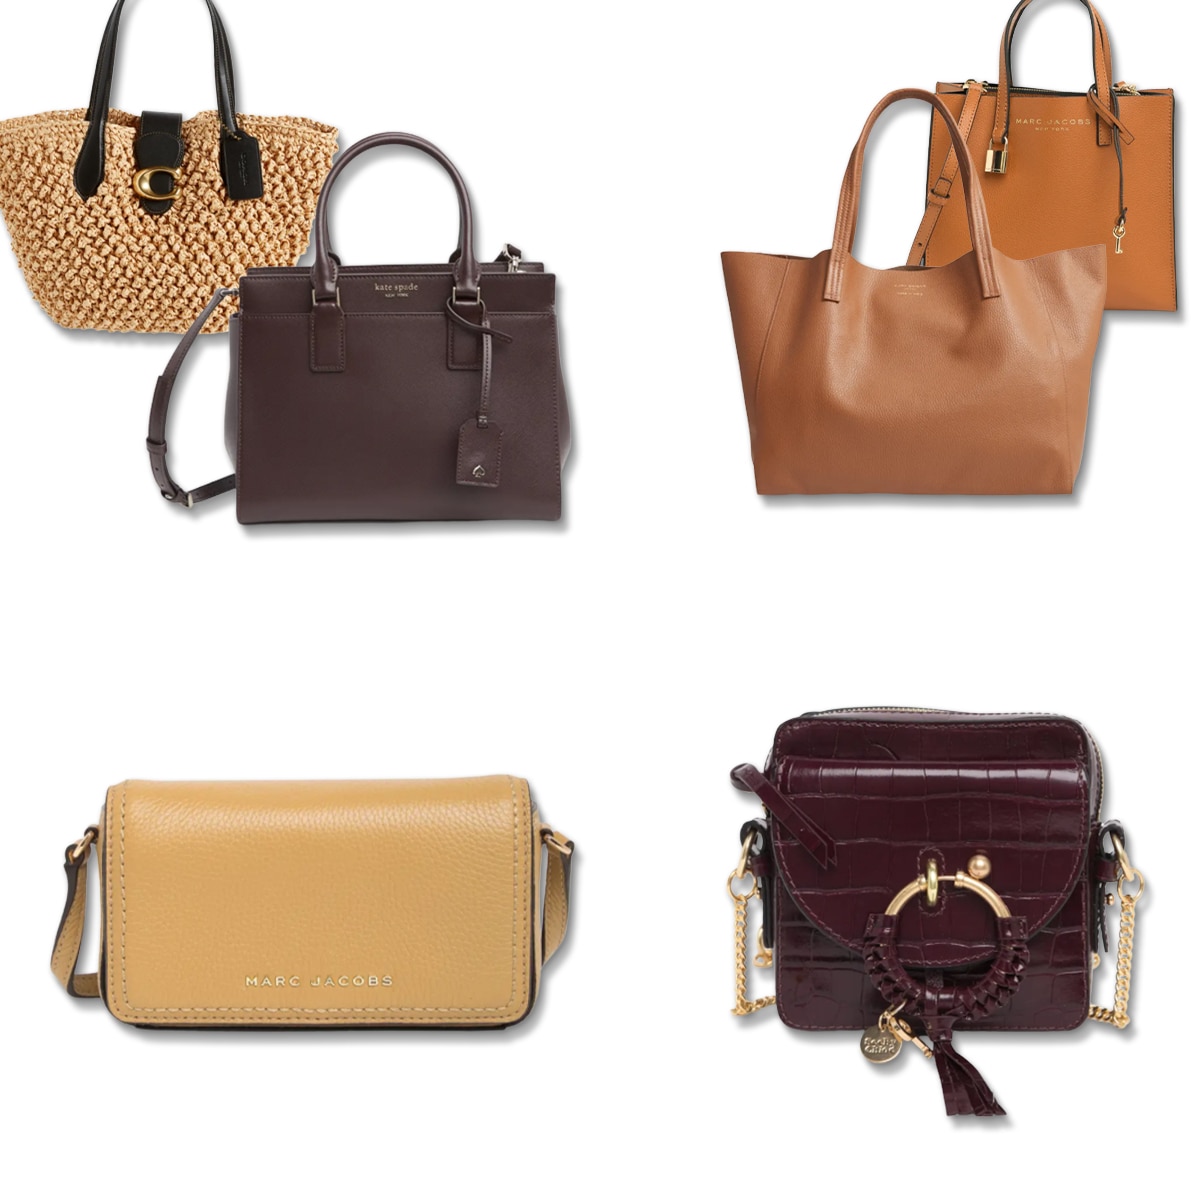 adorable! | Women, Fashion, Women handbags